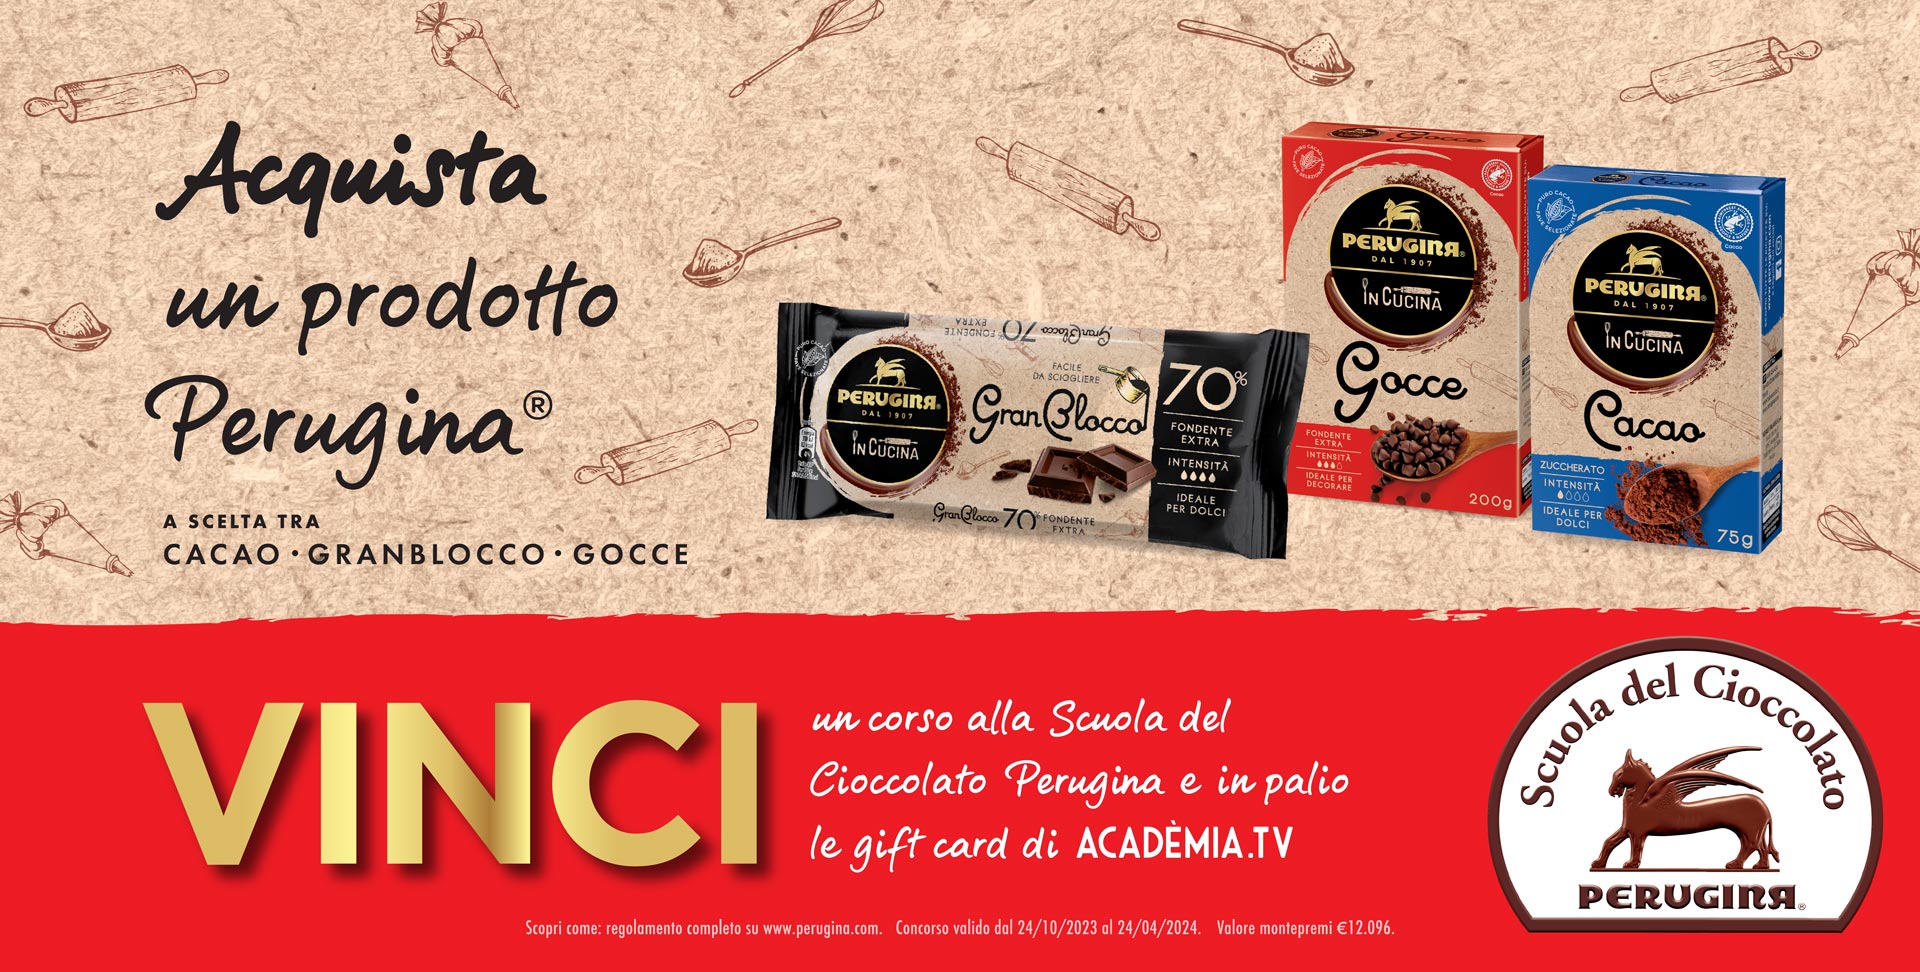 Concorso Perugina - Vinci corso casa del cioccolato Perugina